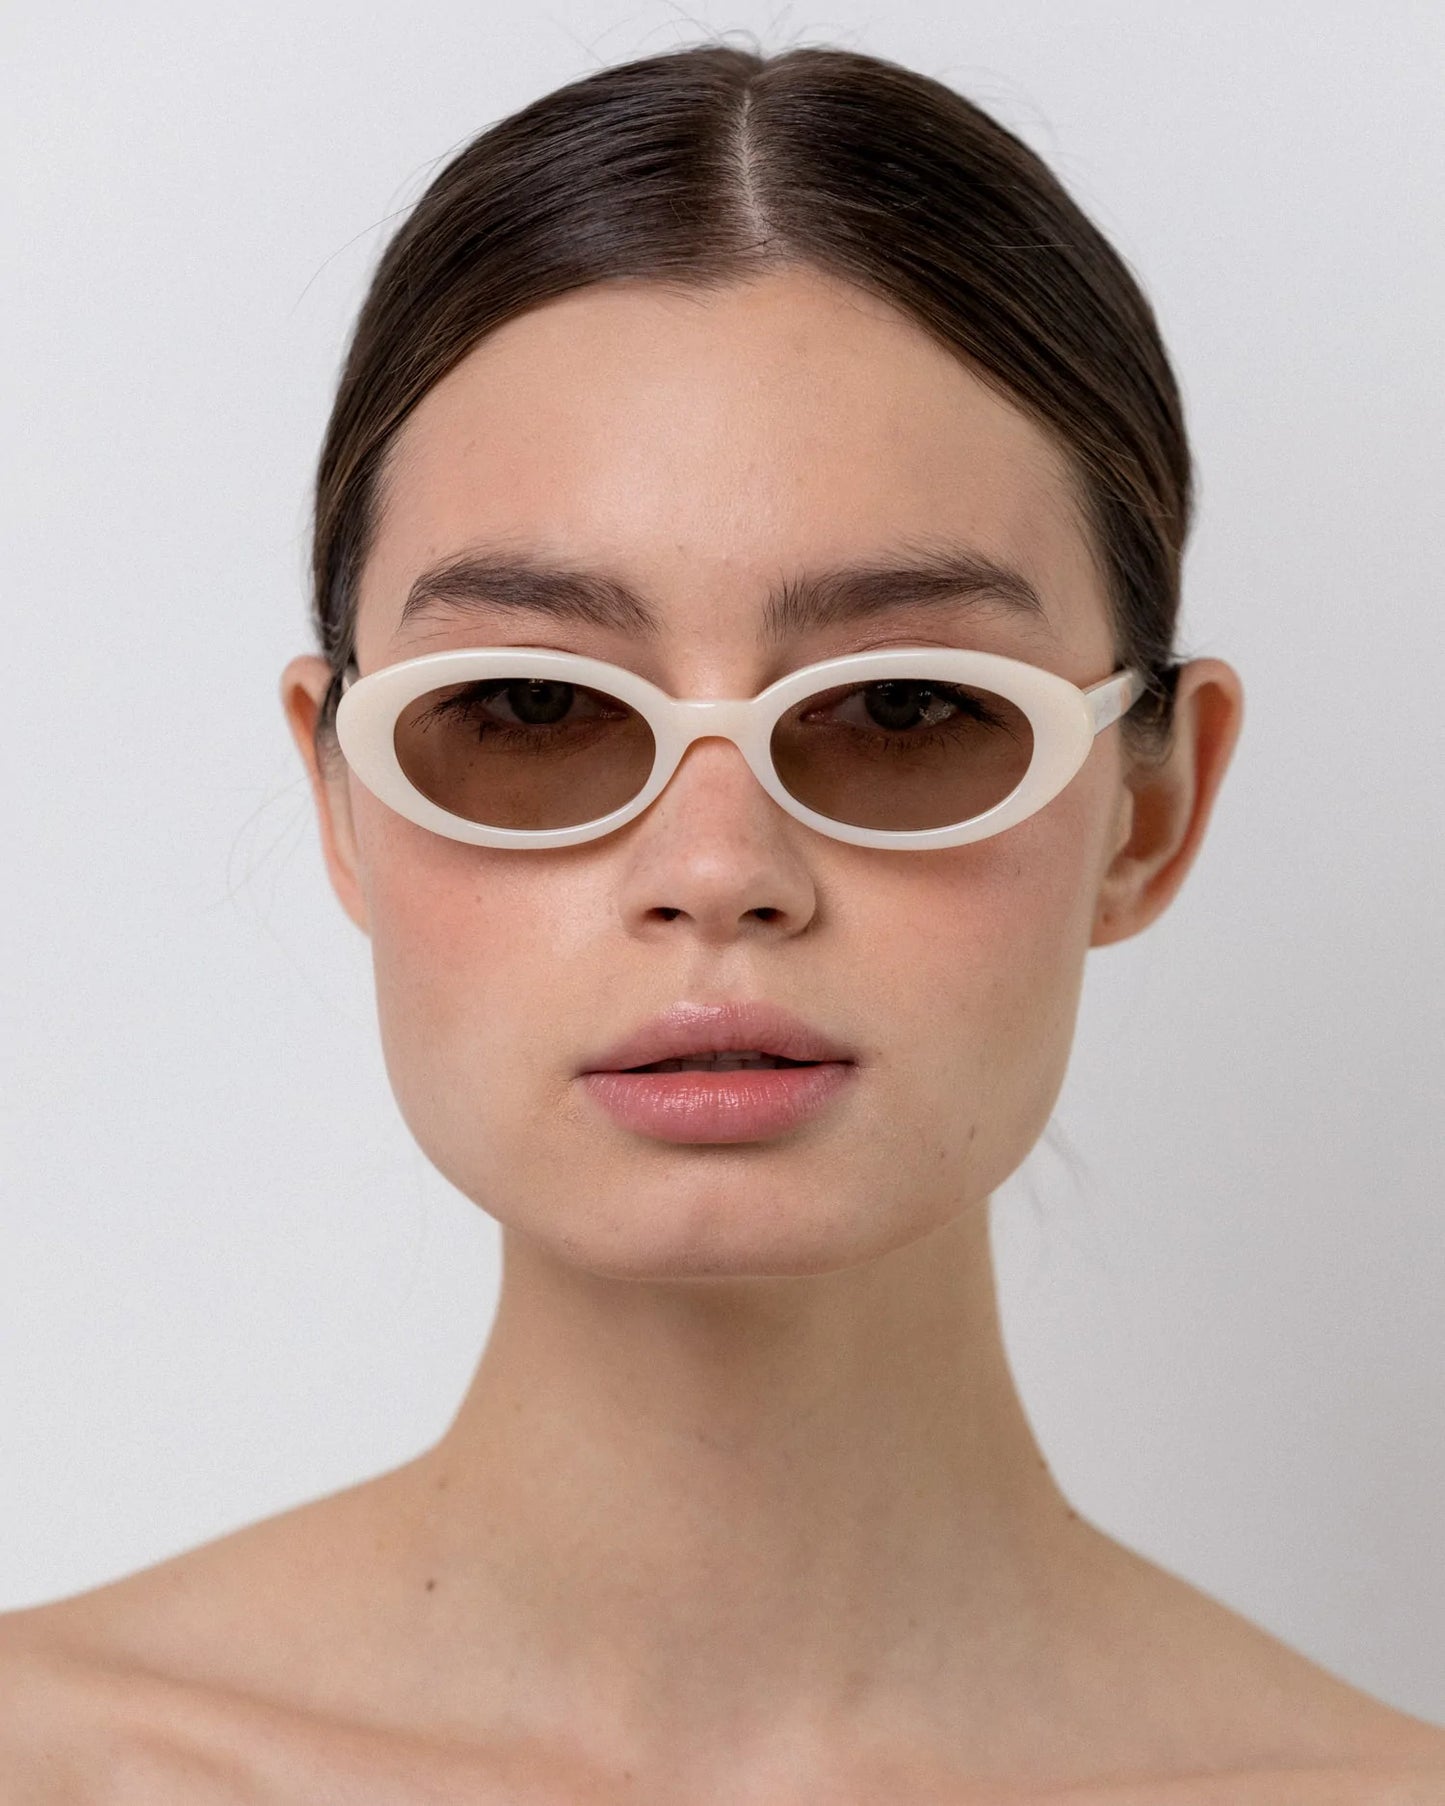 Sylvie - Crème Sunglasses